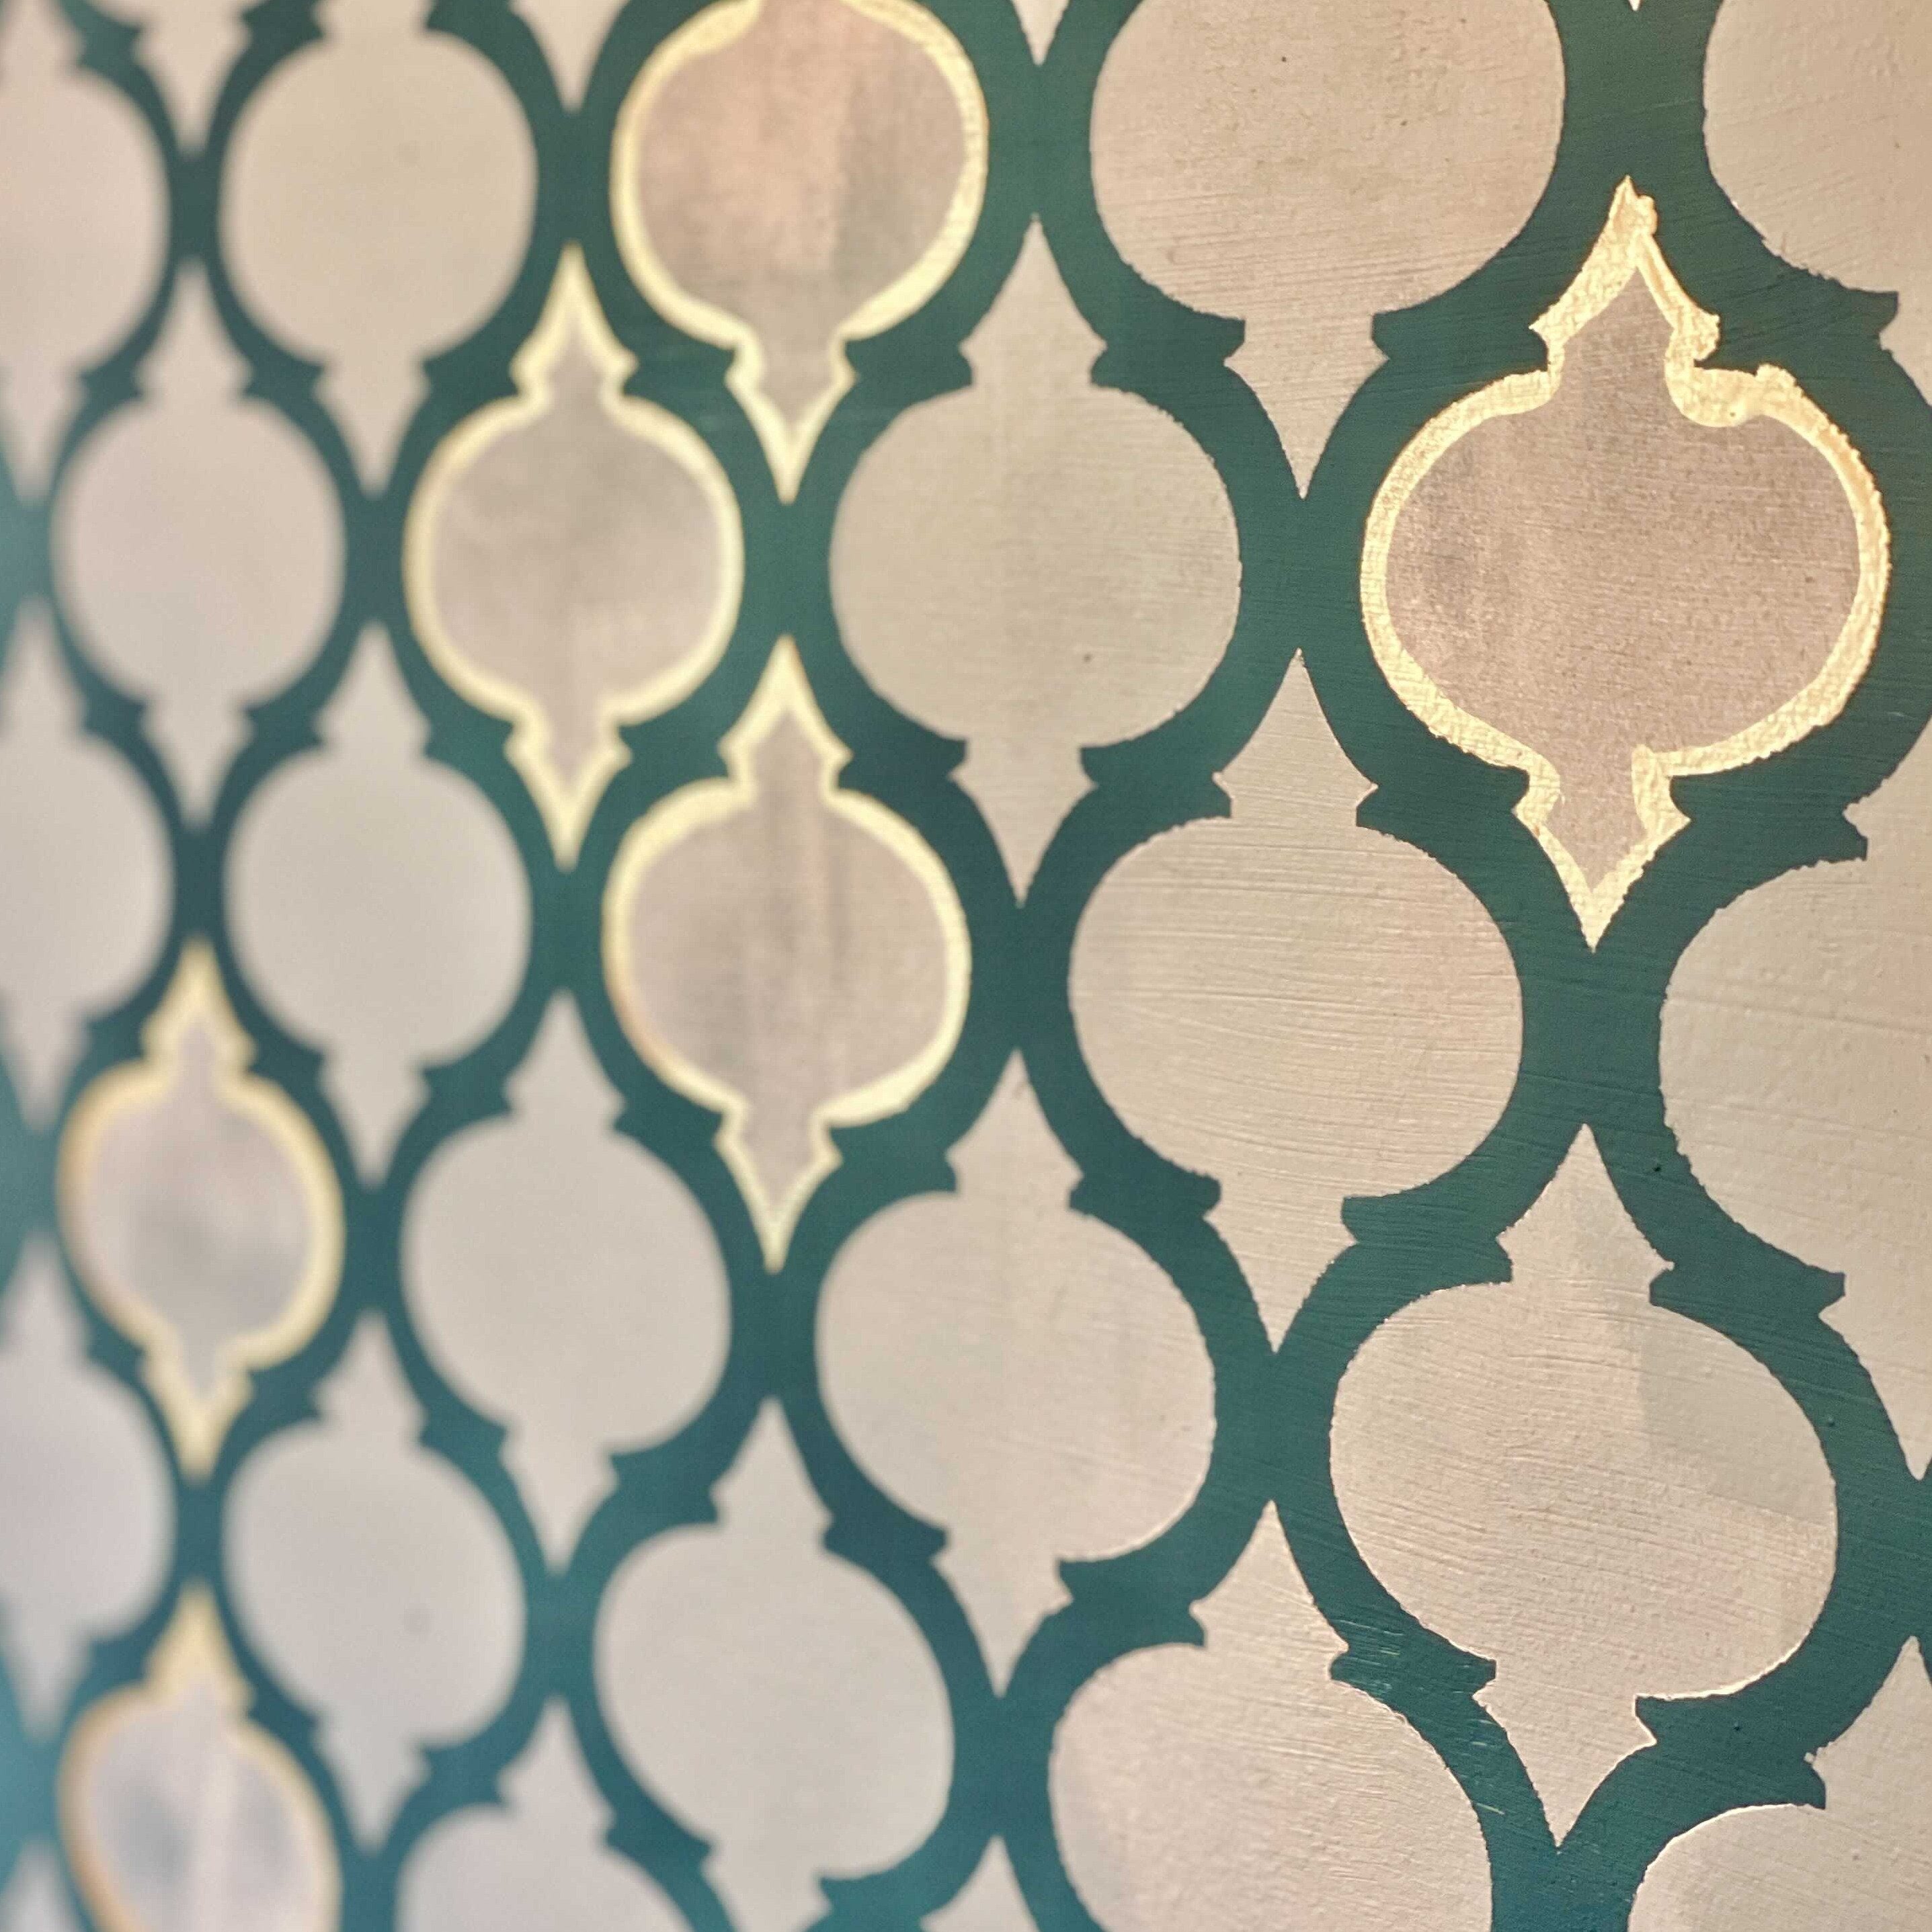 Moroccan lantern pattern wall paint design